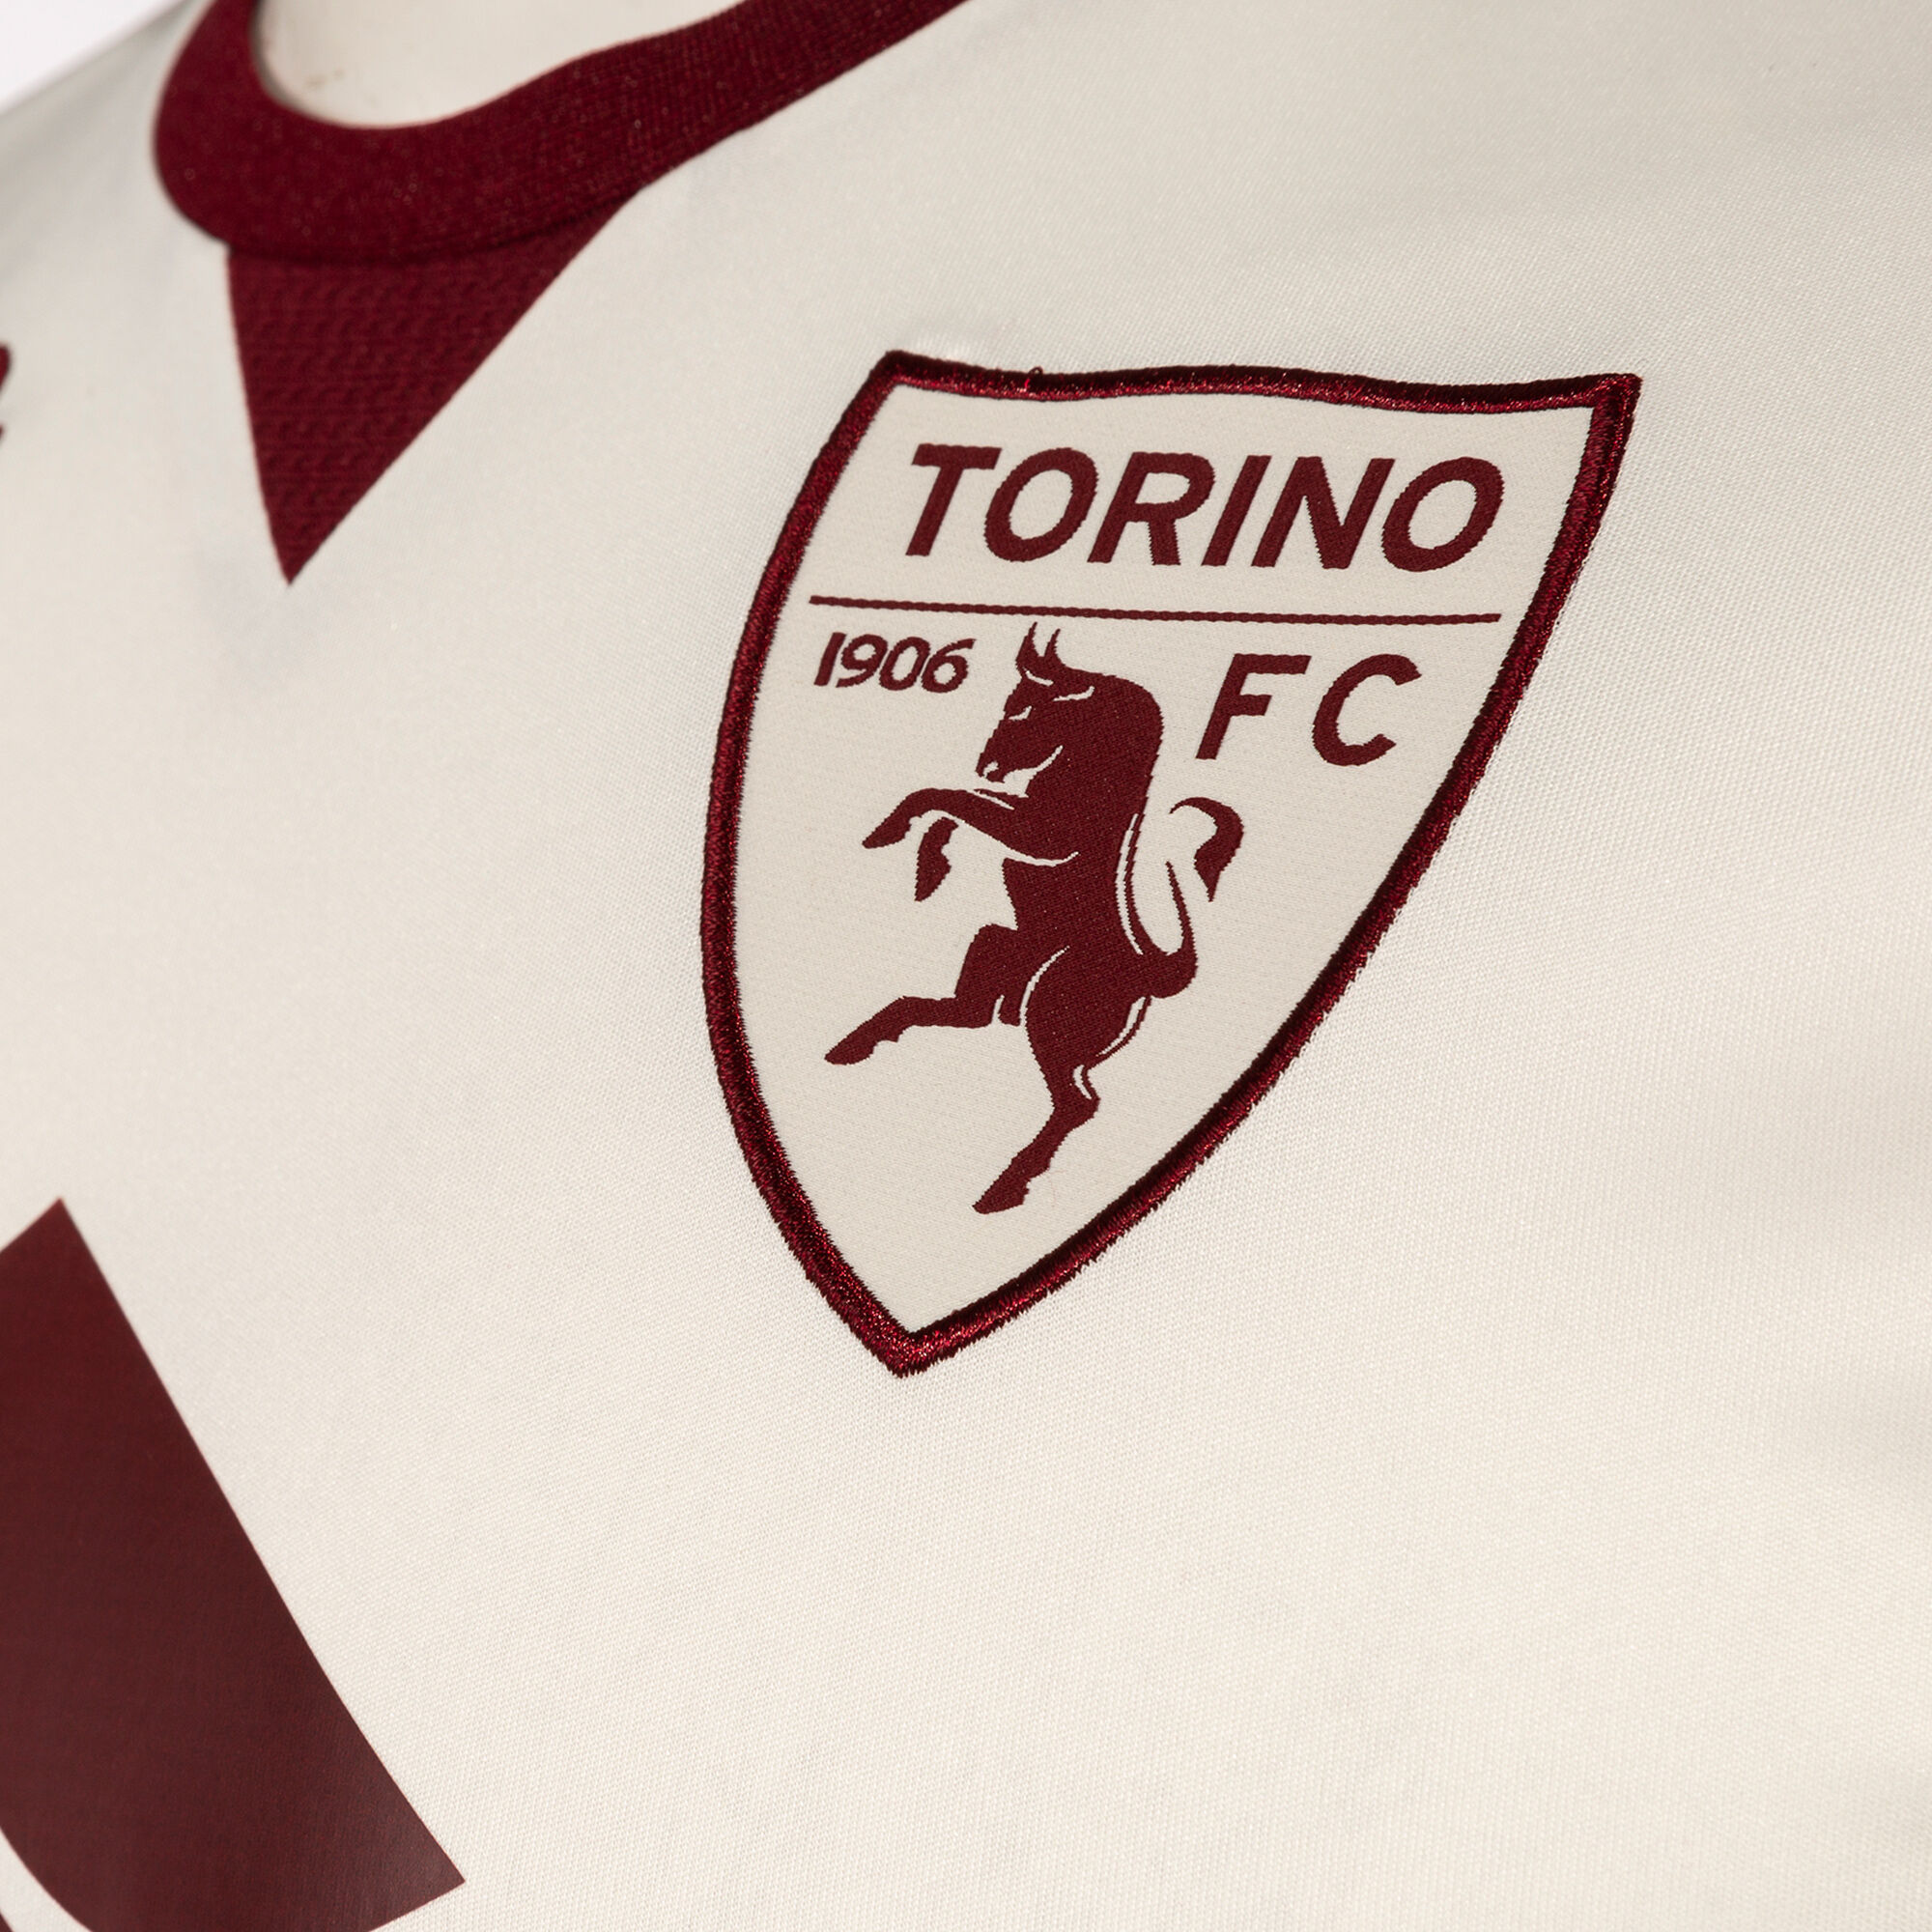 Shirt short sleeve home kit Torino 23/24